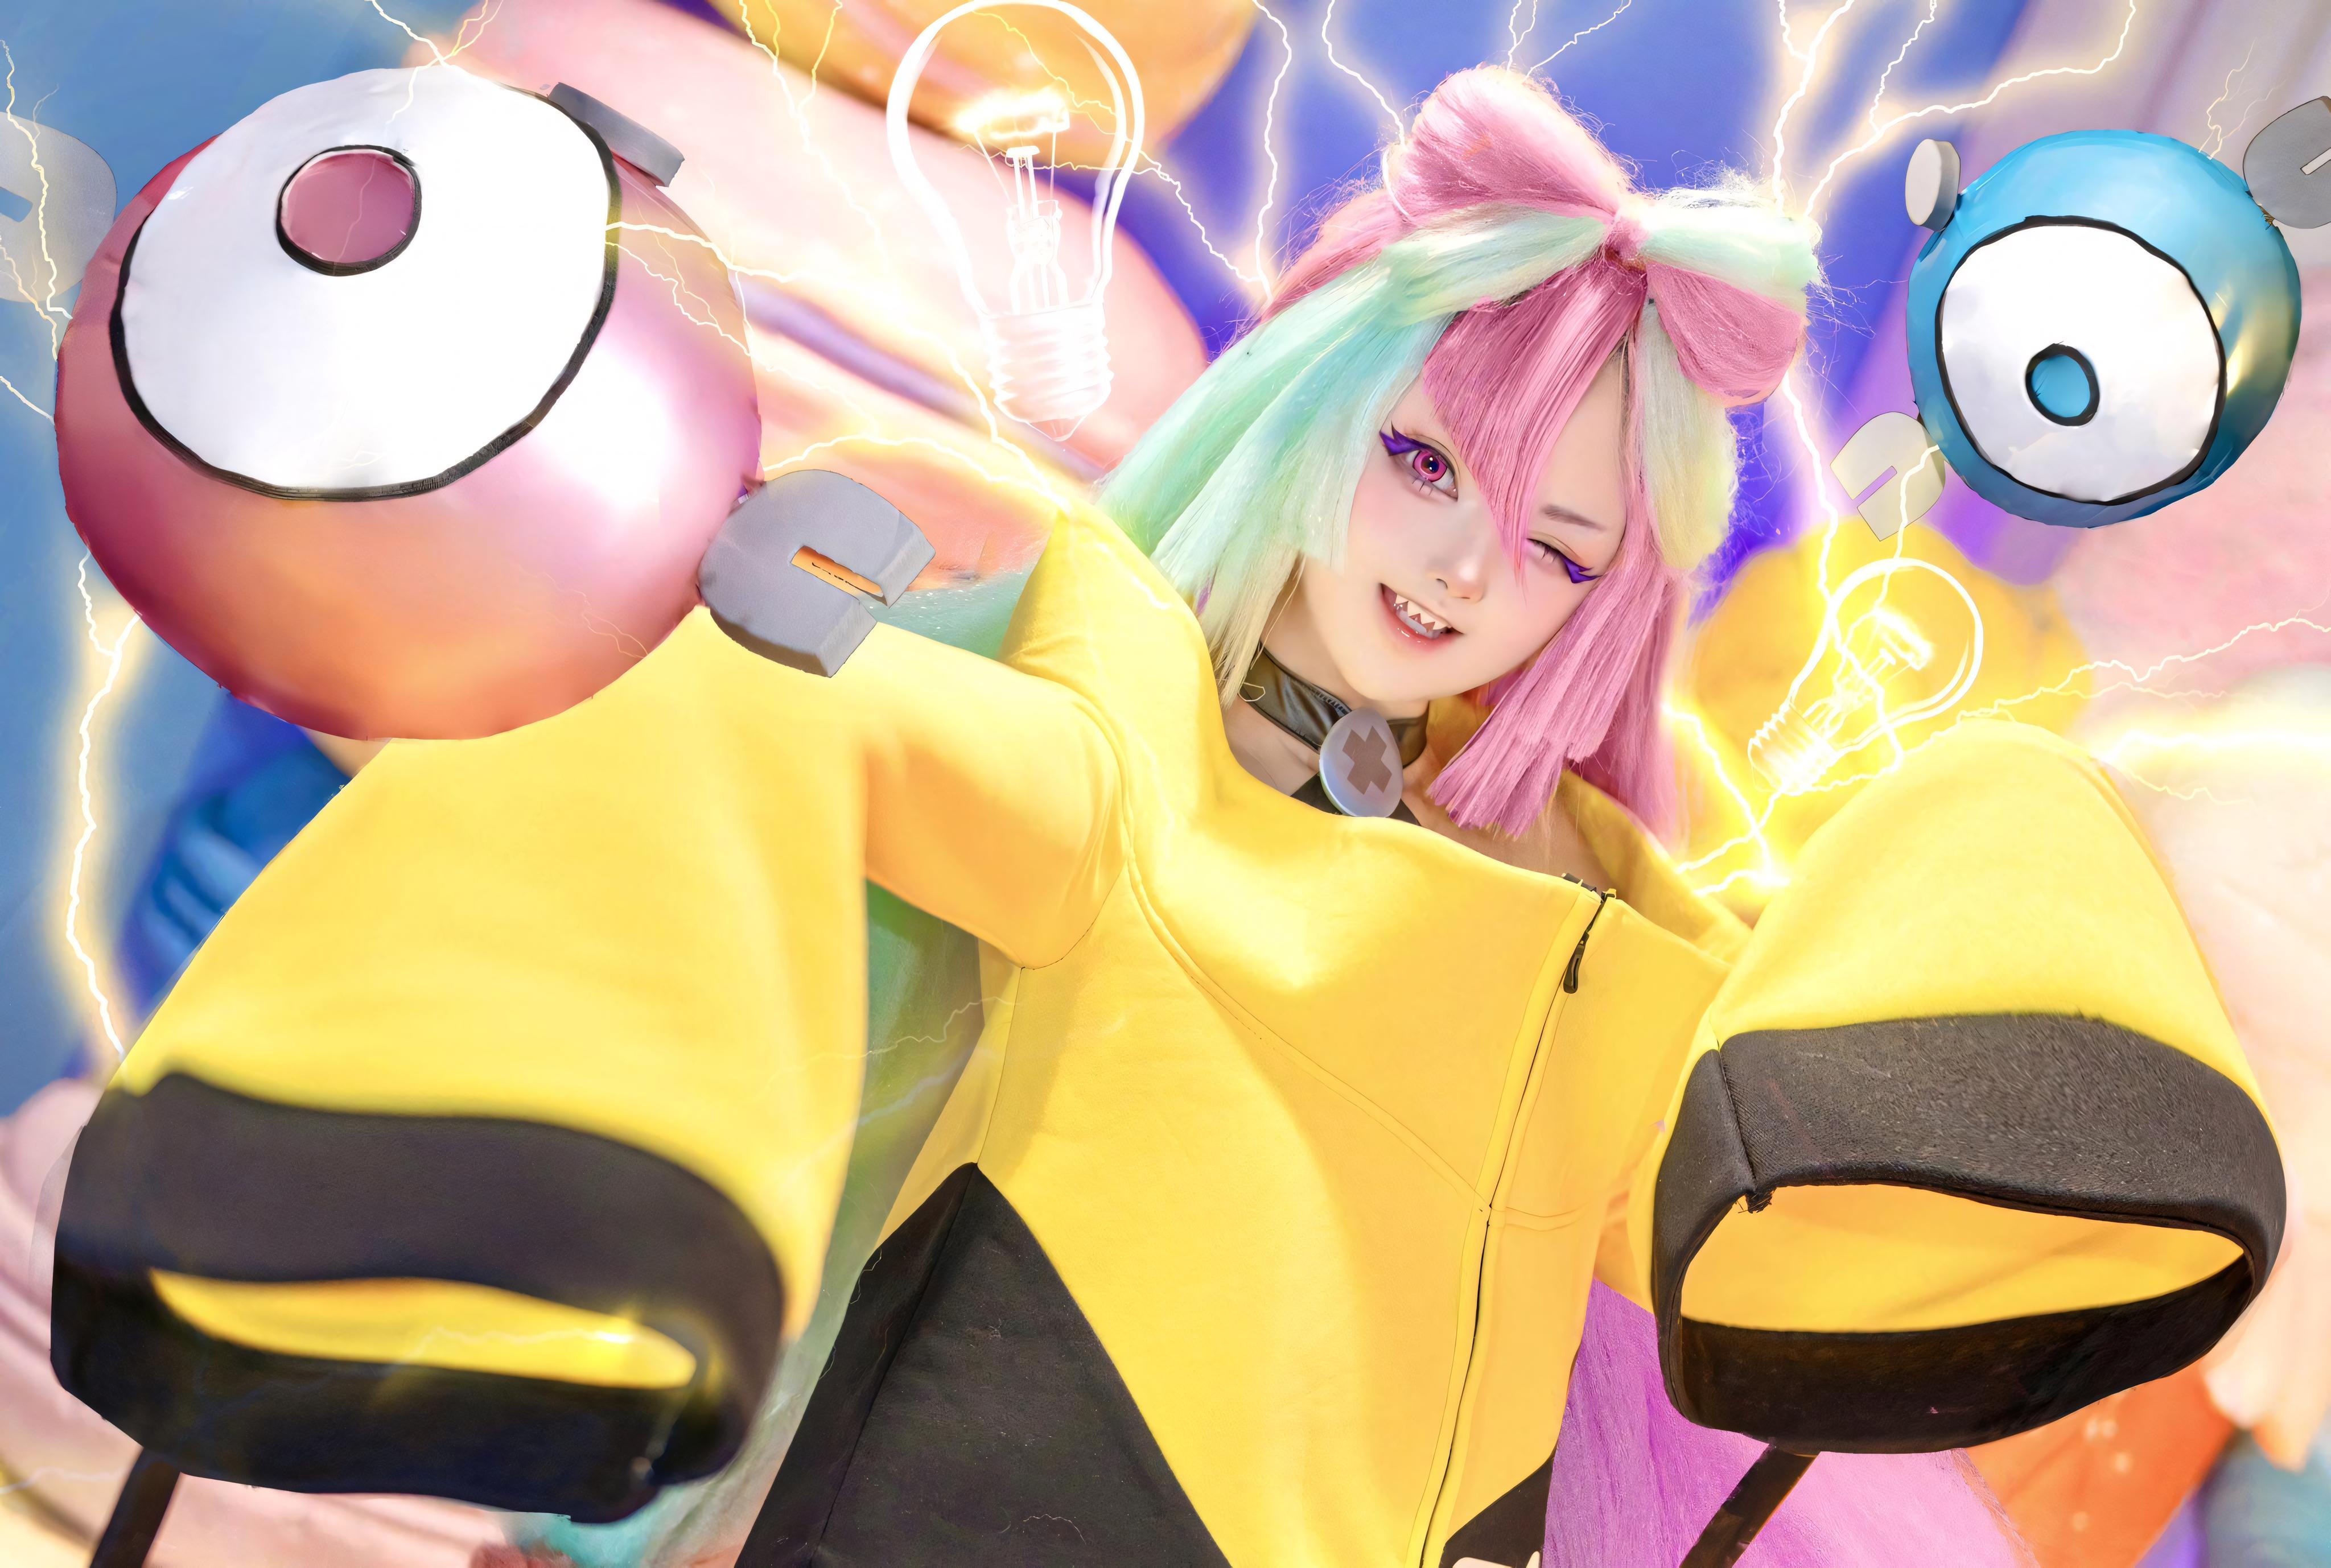 People 4096x2756 Seeuxiaorou cosplay photoshopped yellow jacket smiling oversized outfit Pokémon long hair plush toy Asian